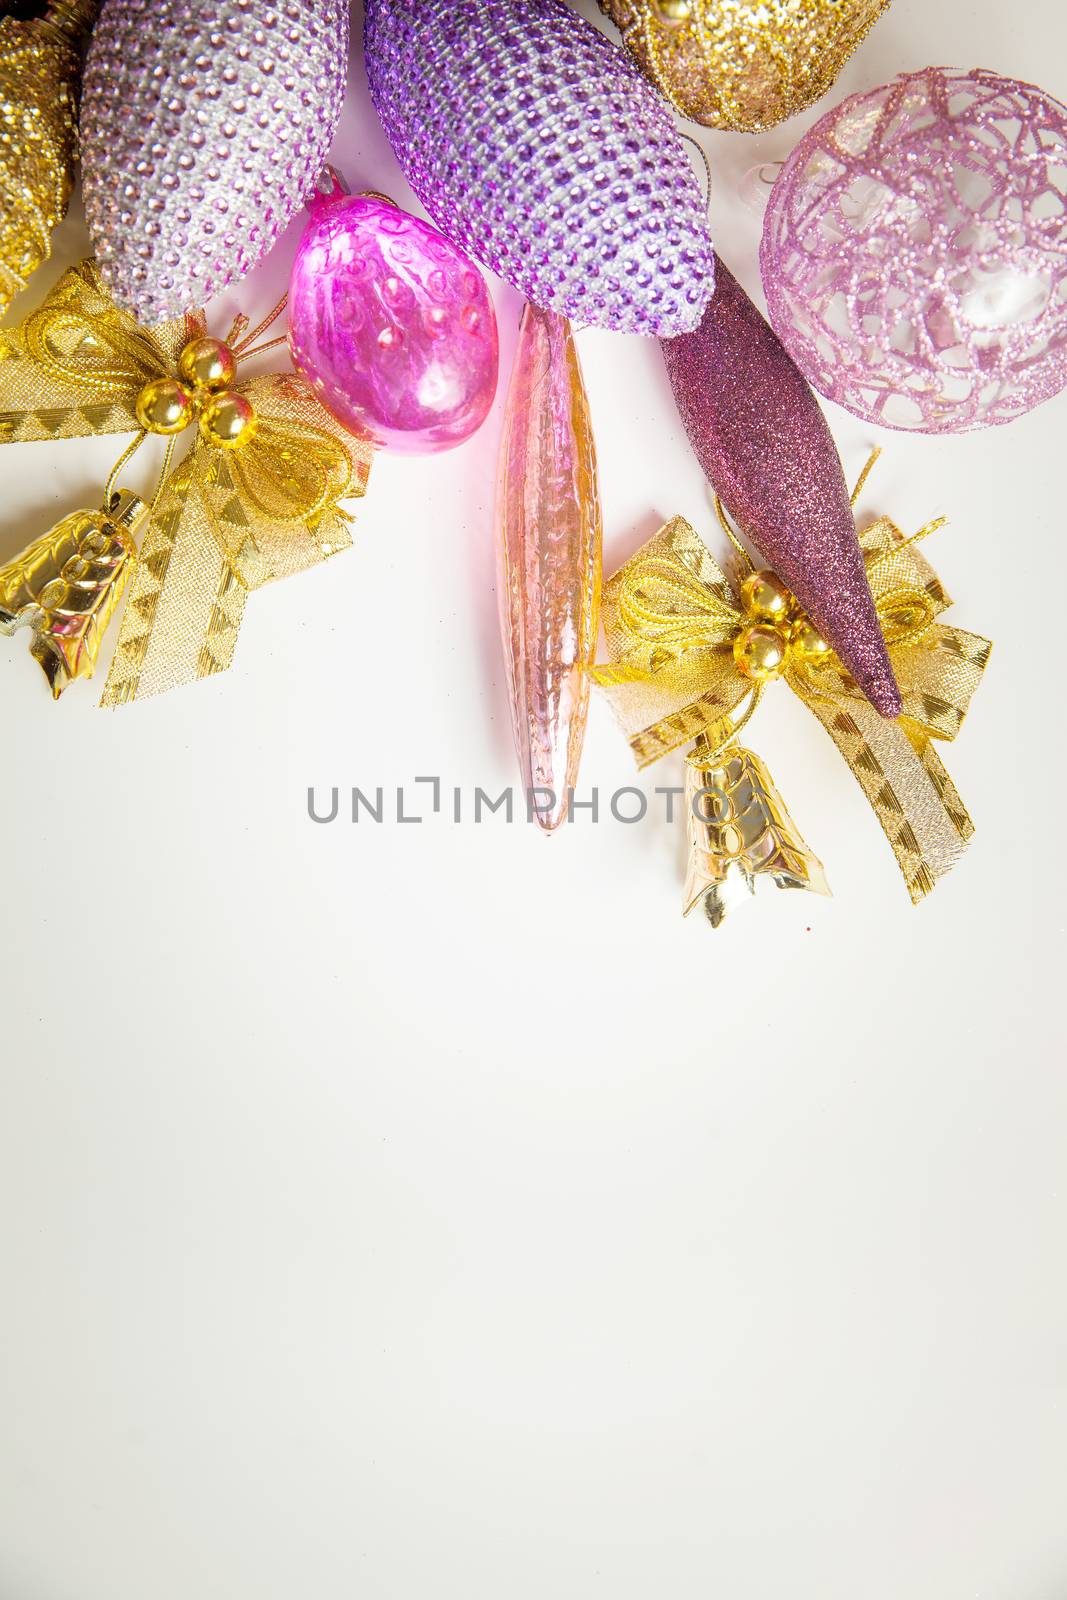 pink and golden Christmas 2019 decor closeup for design by mi_viri